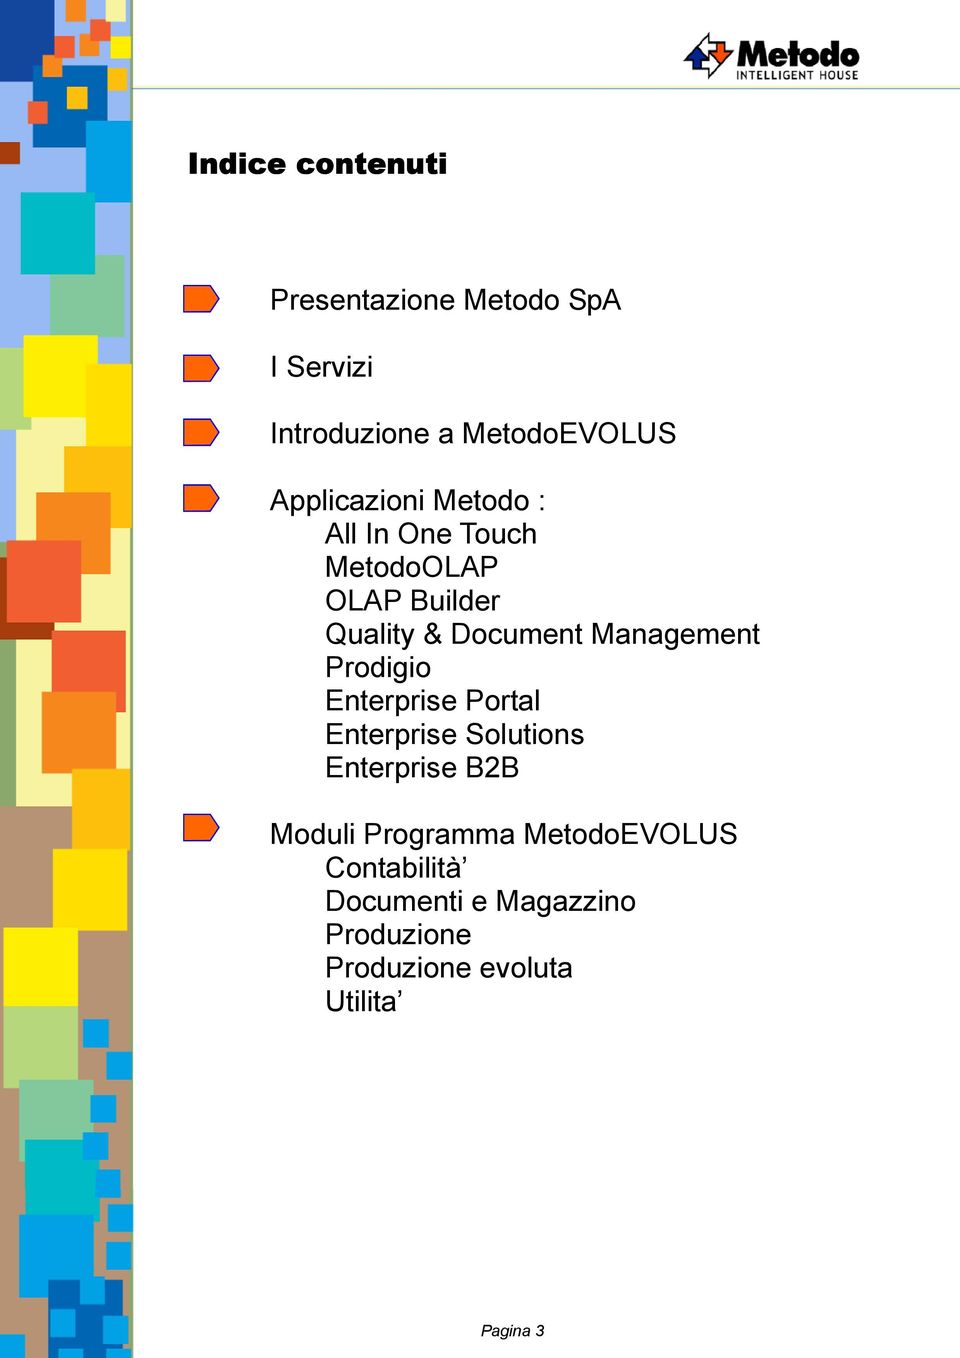 Management Prodigio Enterprise Portal Enterprise Solutions Enterprise B2B Moduli